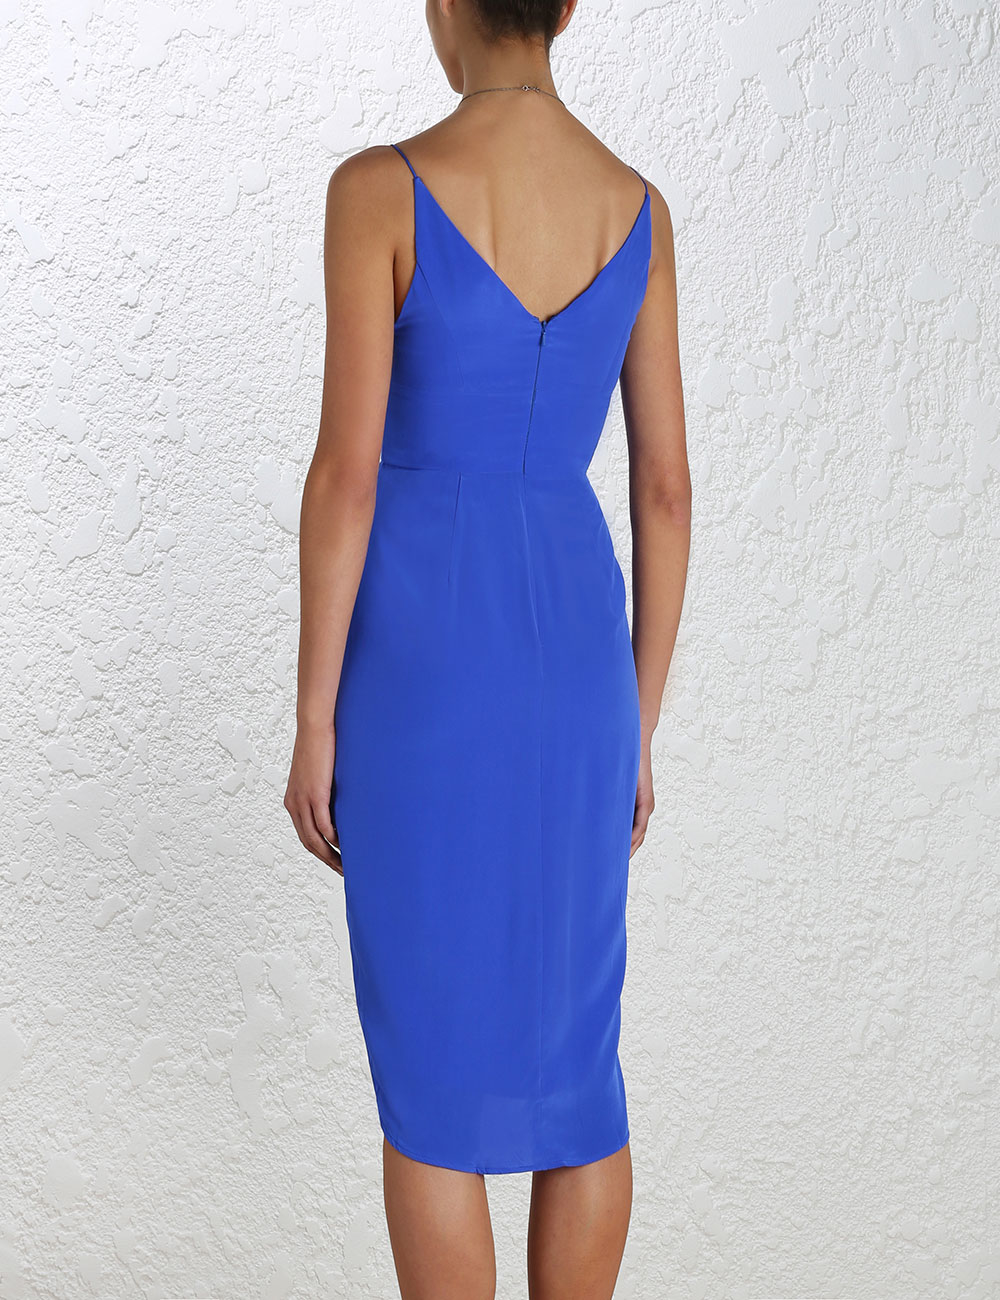 Zimmermann Silk V Tuck Dress in Blue - Lyst